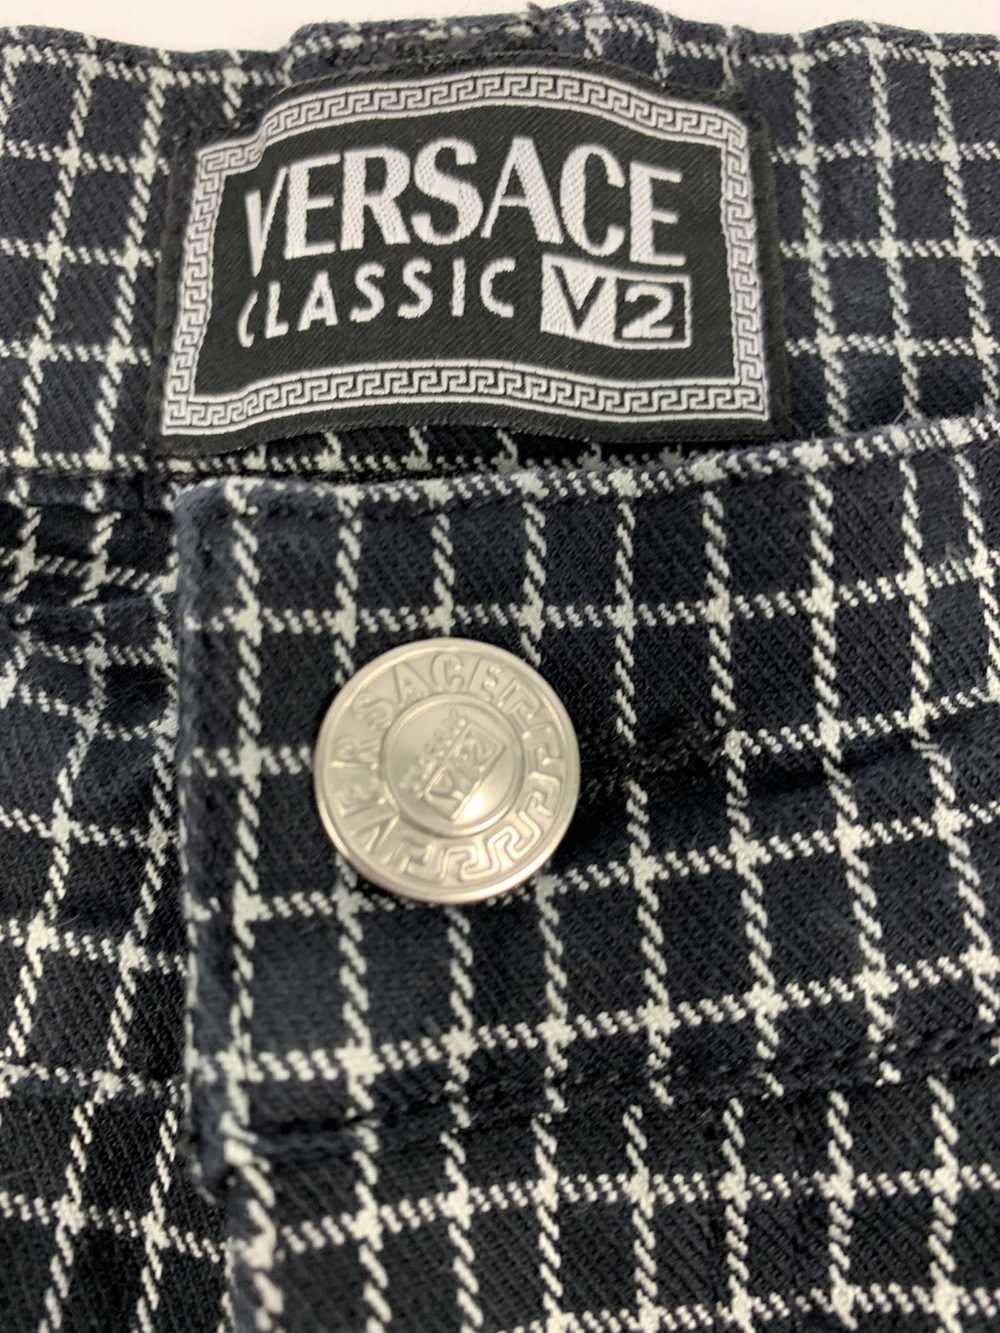 Versace × Vintage Versace Classic V2 Pants - image 5